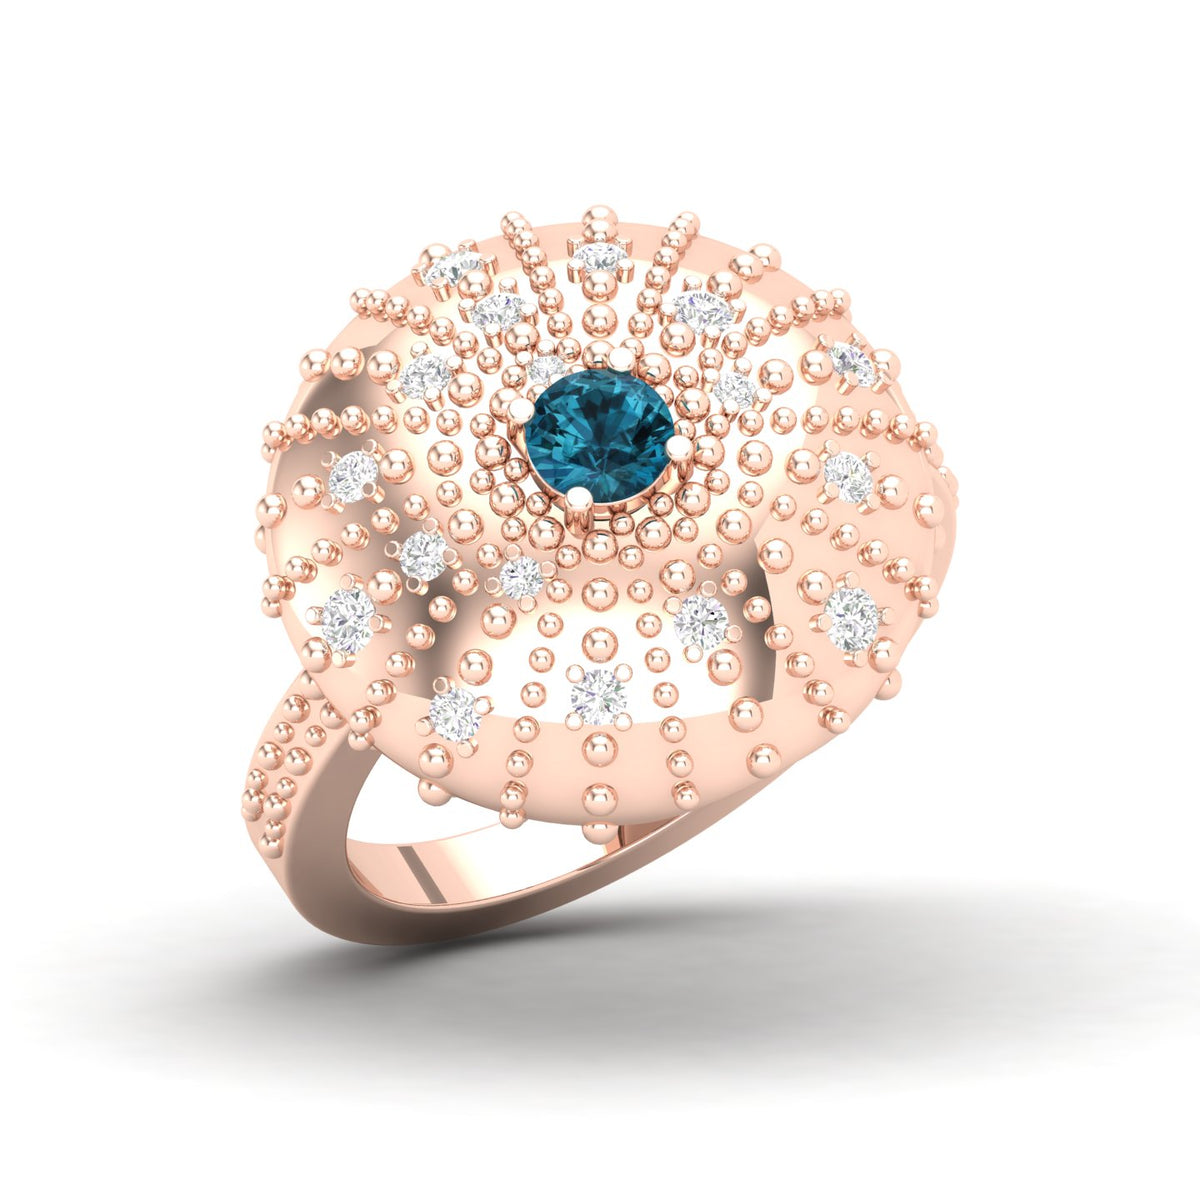 Maurya Desert London Blue Topaz Cocktail Ring with Scattered Diamonds